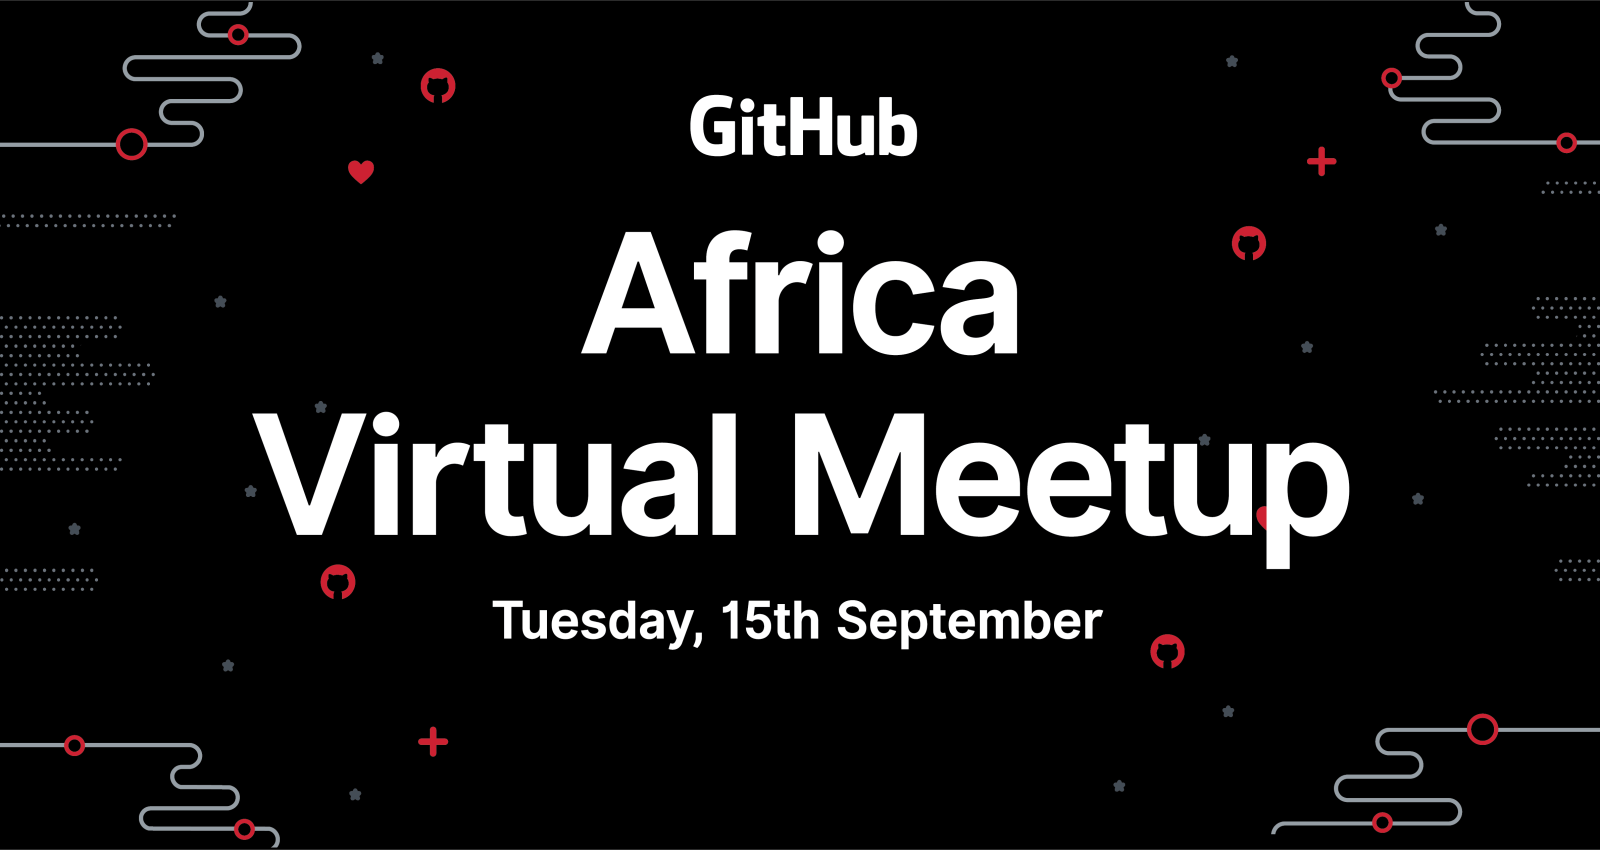 GitHub Africa Virtual Meetup